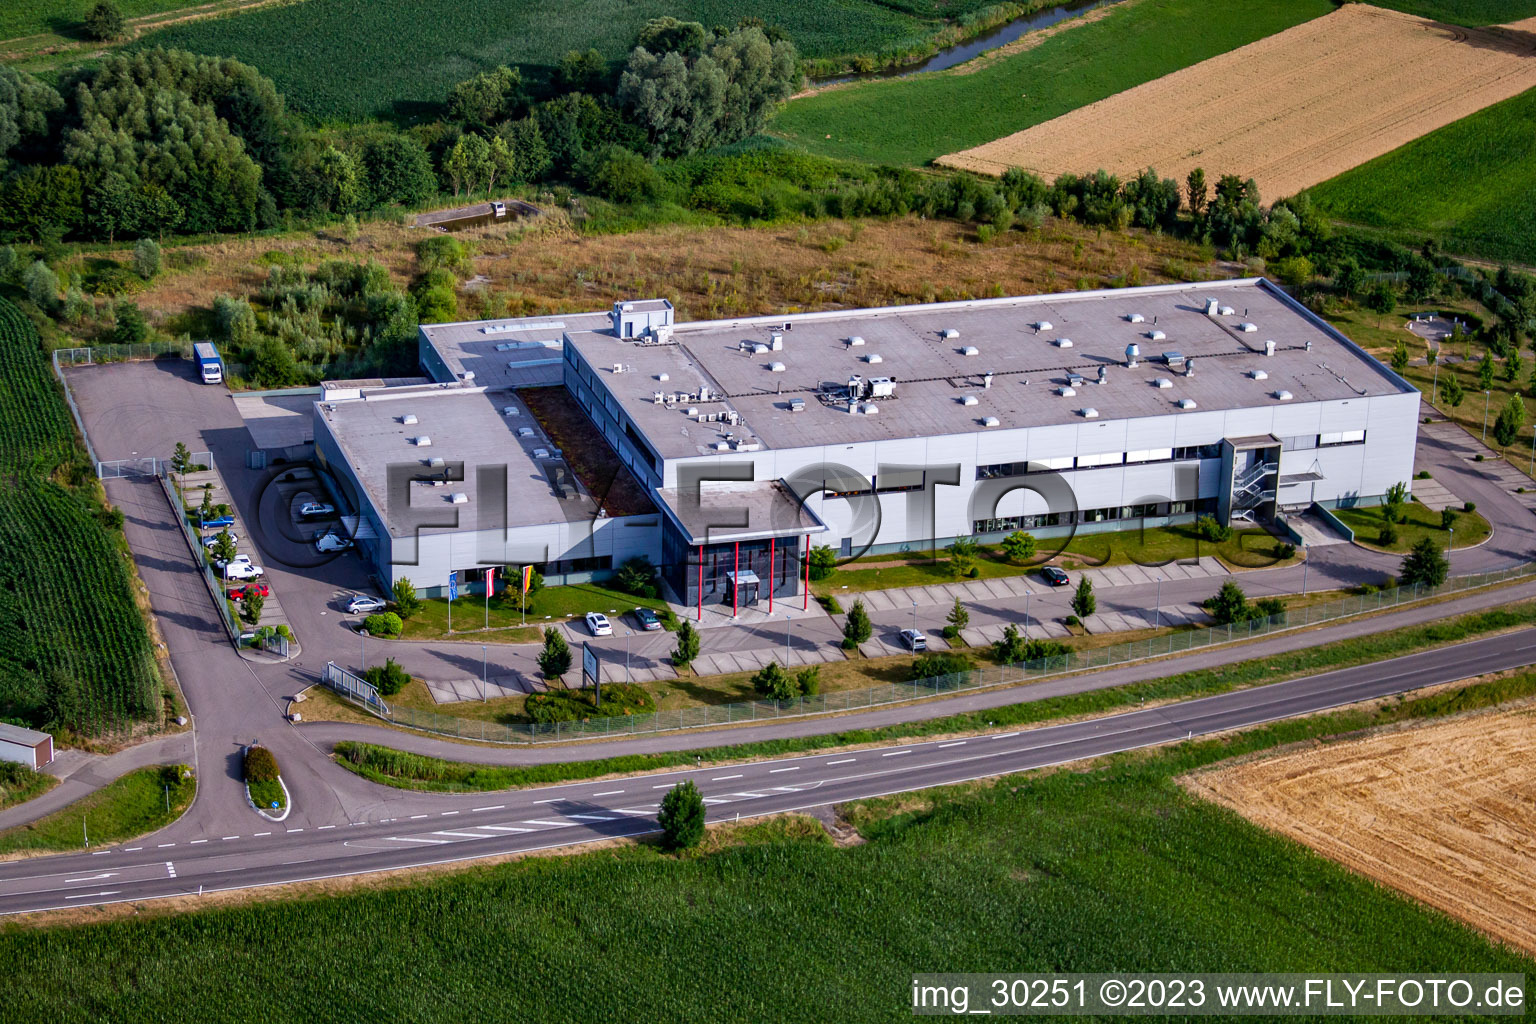 ADA Cosmetics International GmbH à le quartier Bodersweier in Kehl dans le département Bade-Wurtemberg, Allemagne hors des airs